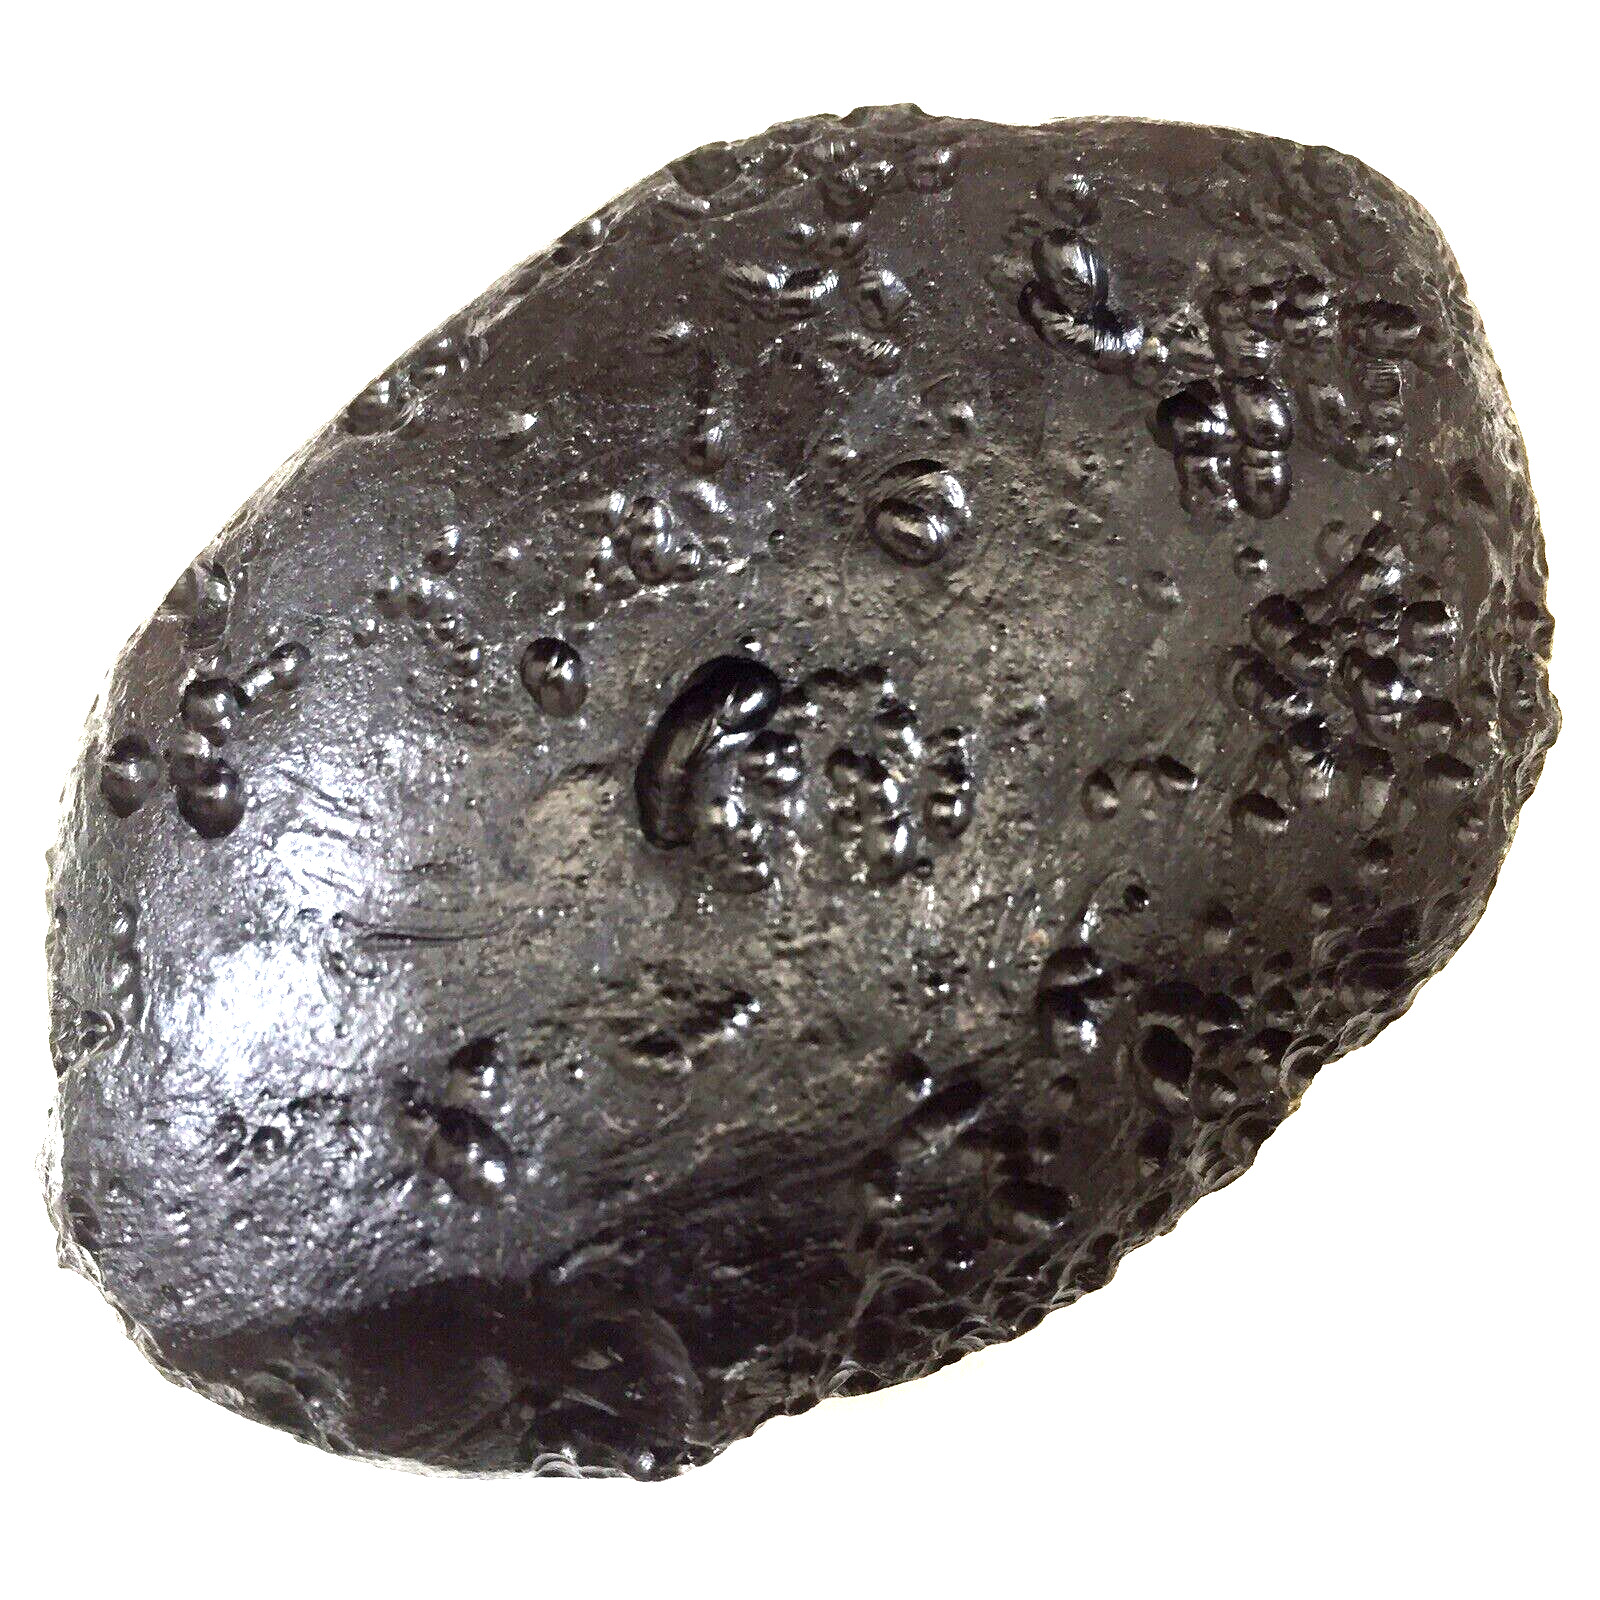 tektite indochinite space rock impactite meteorite impact stone 134 g oval